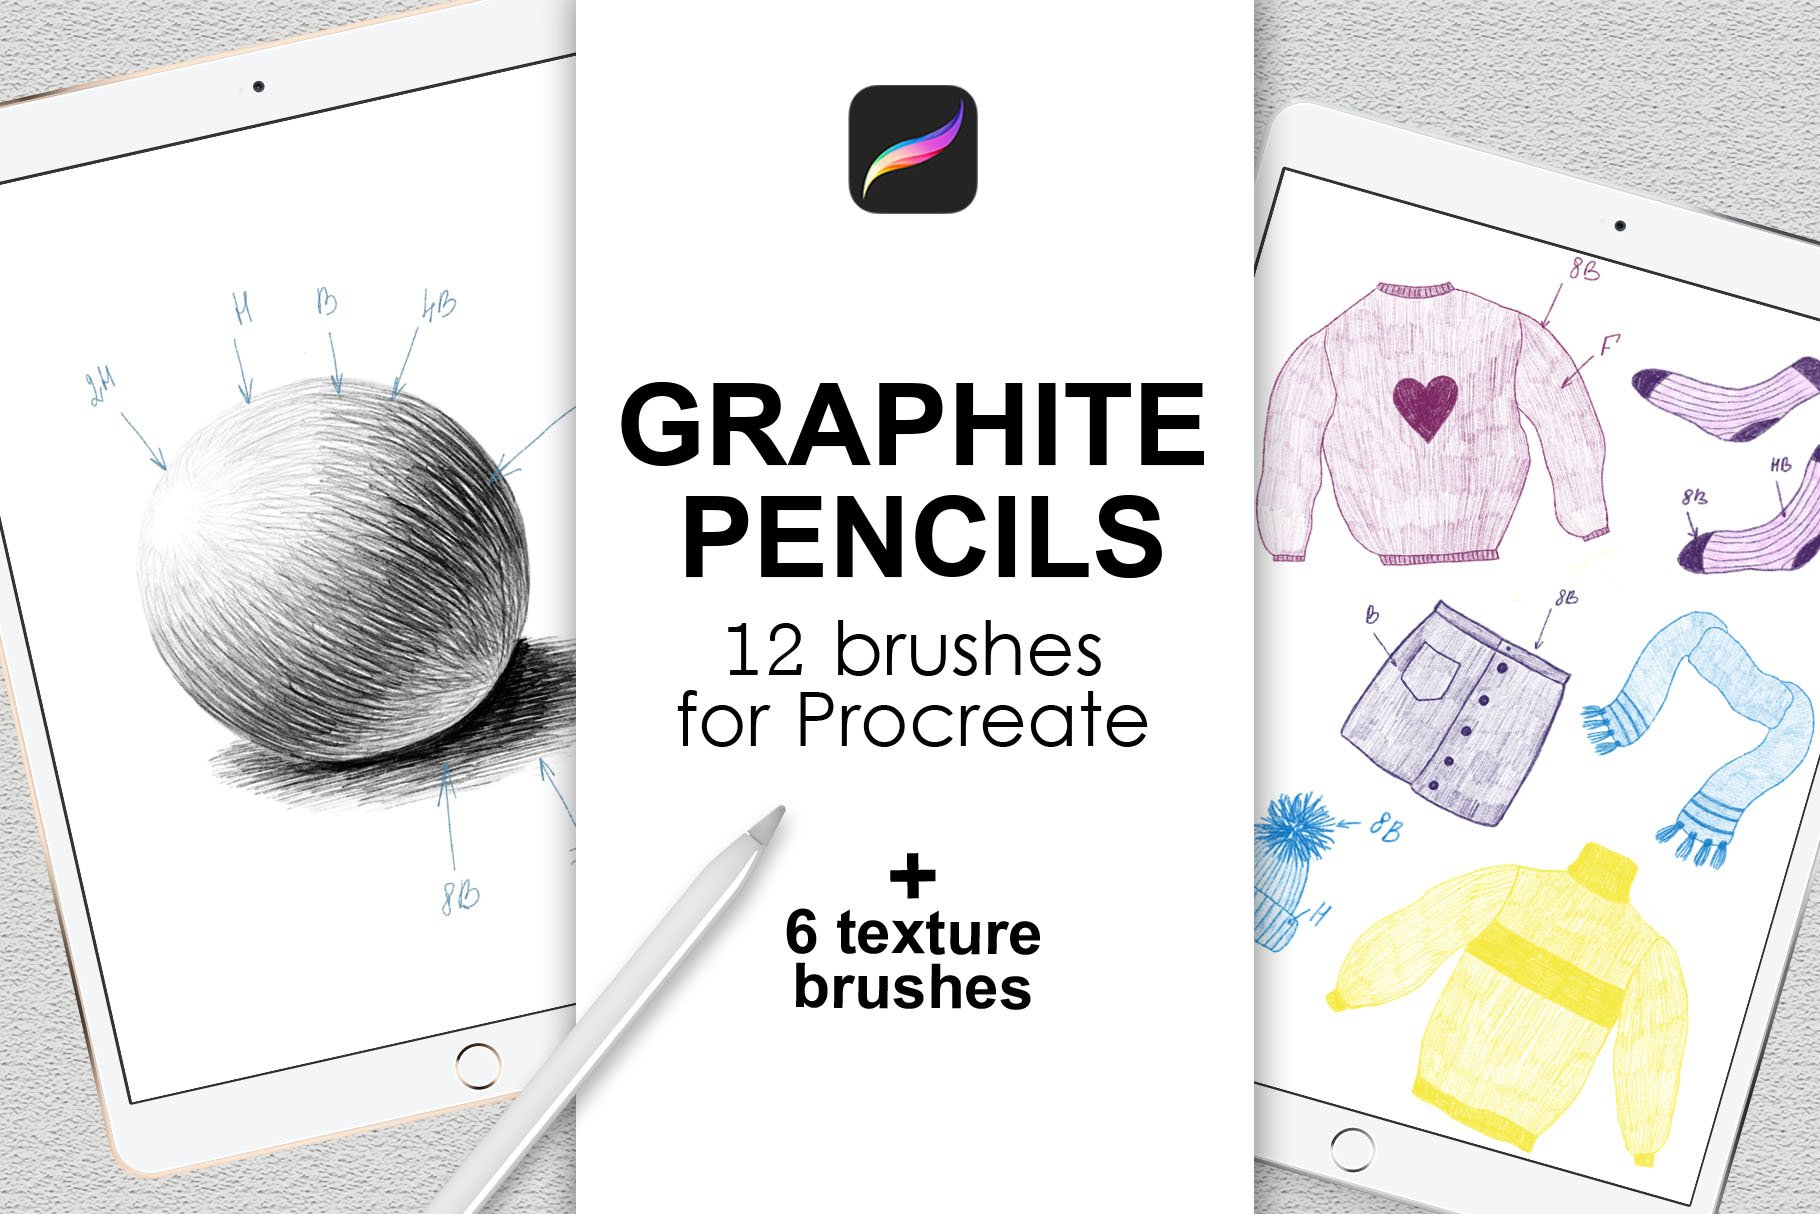 Graphite pencils procreate brushes cover image.